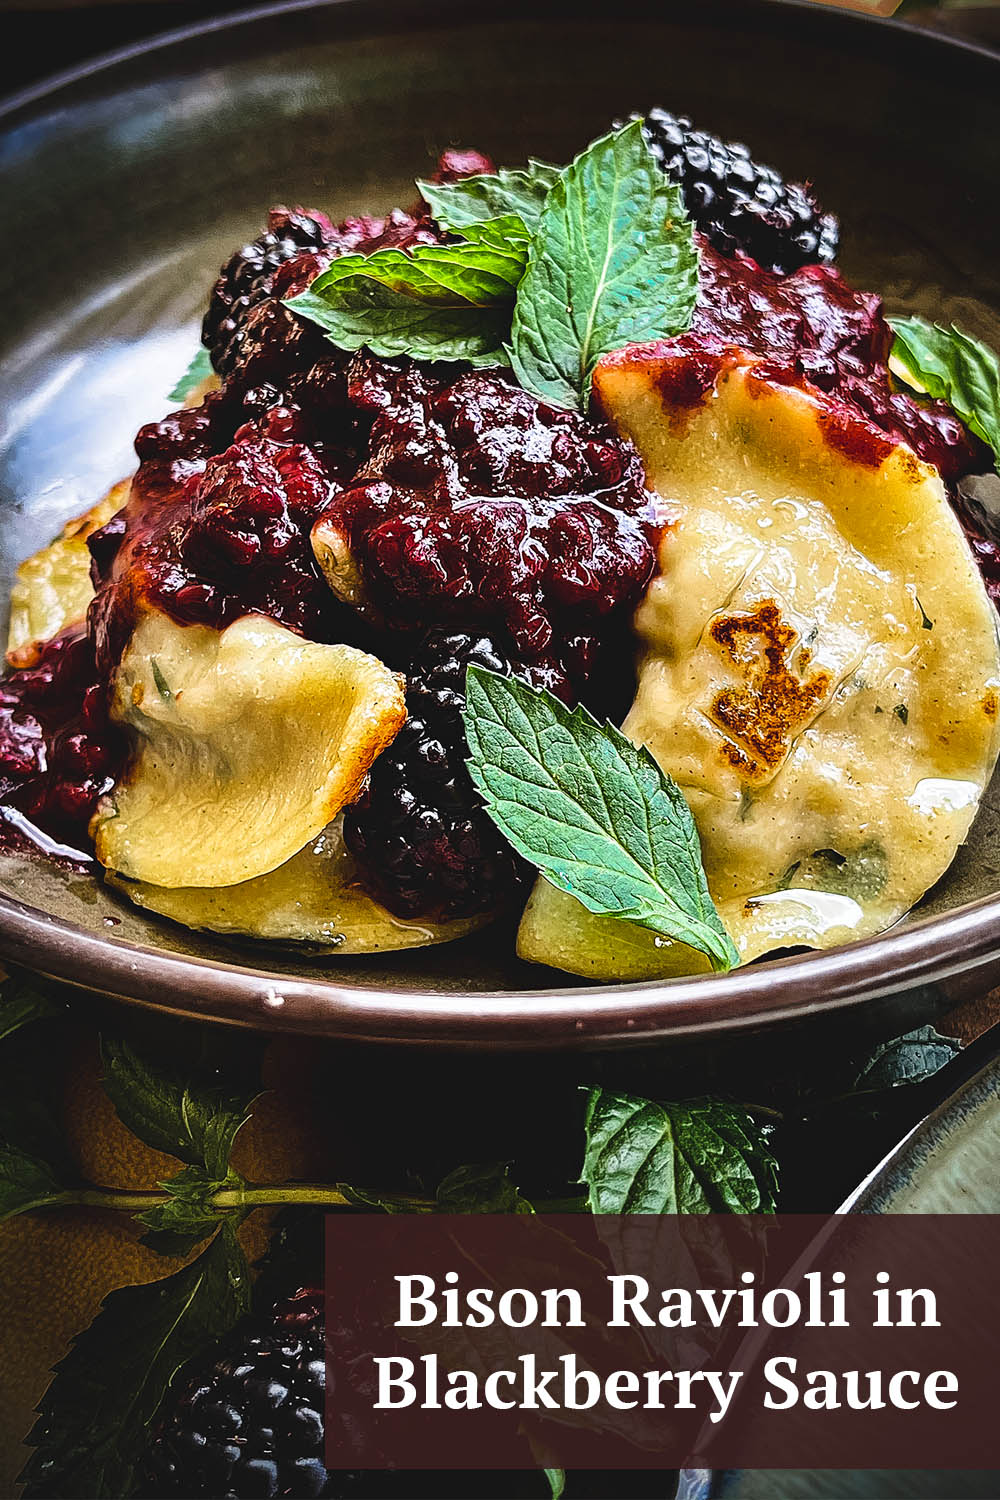 Handmade ravioli with mint, bison and blackberry sauce.